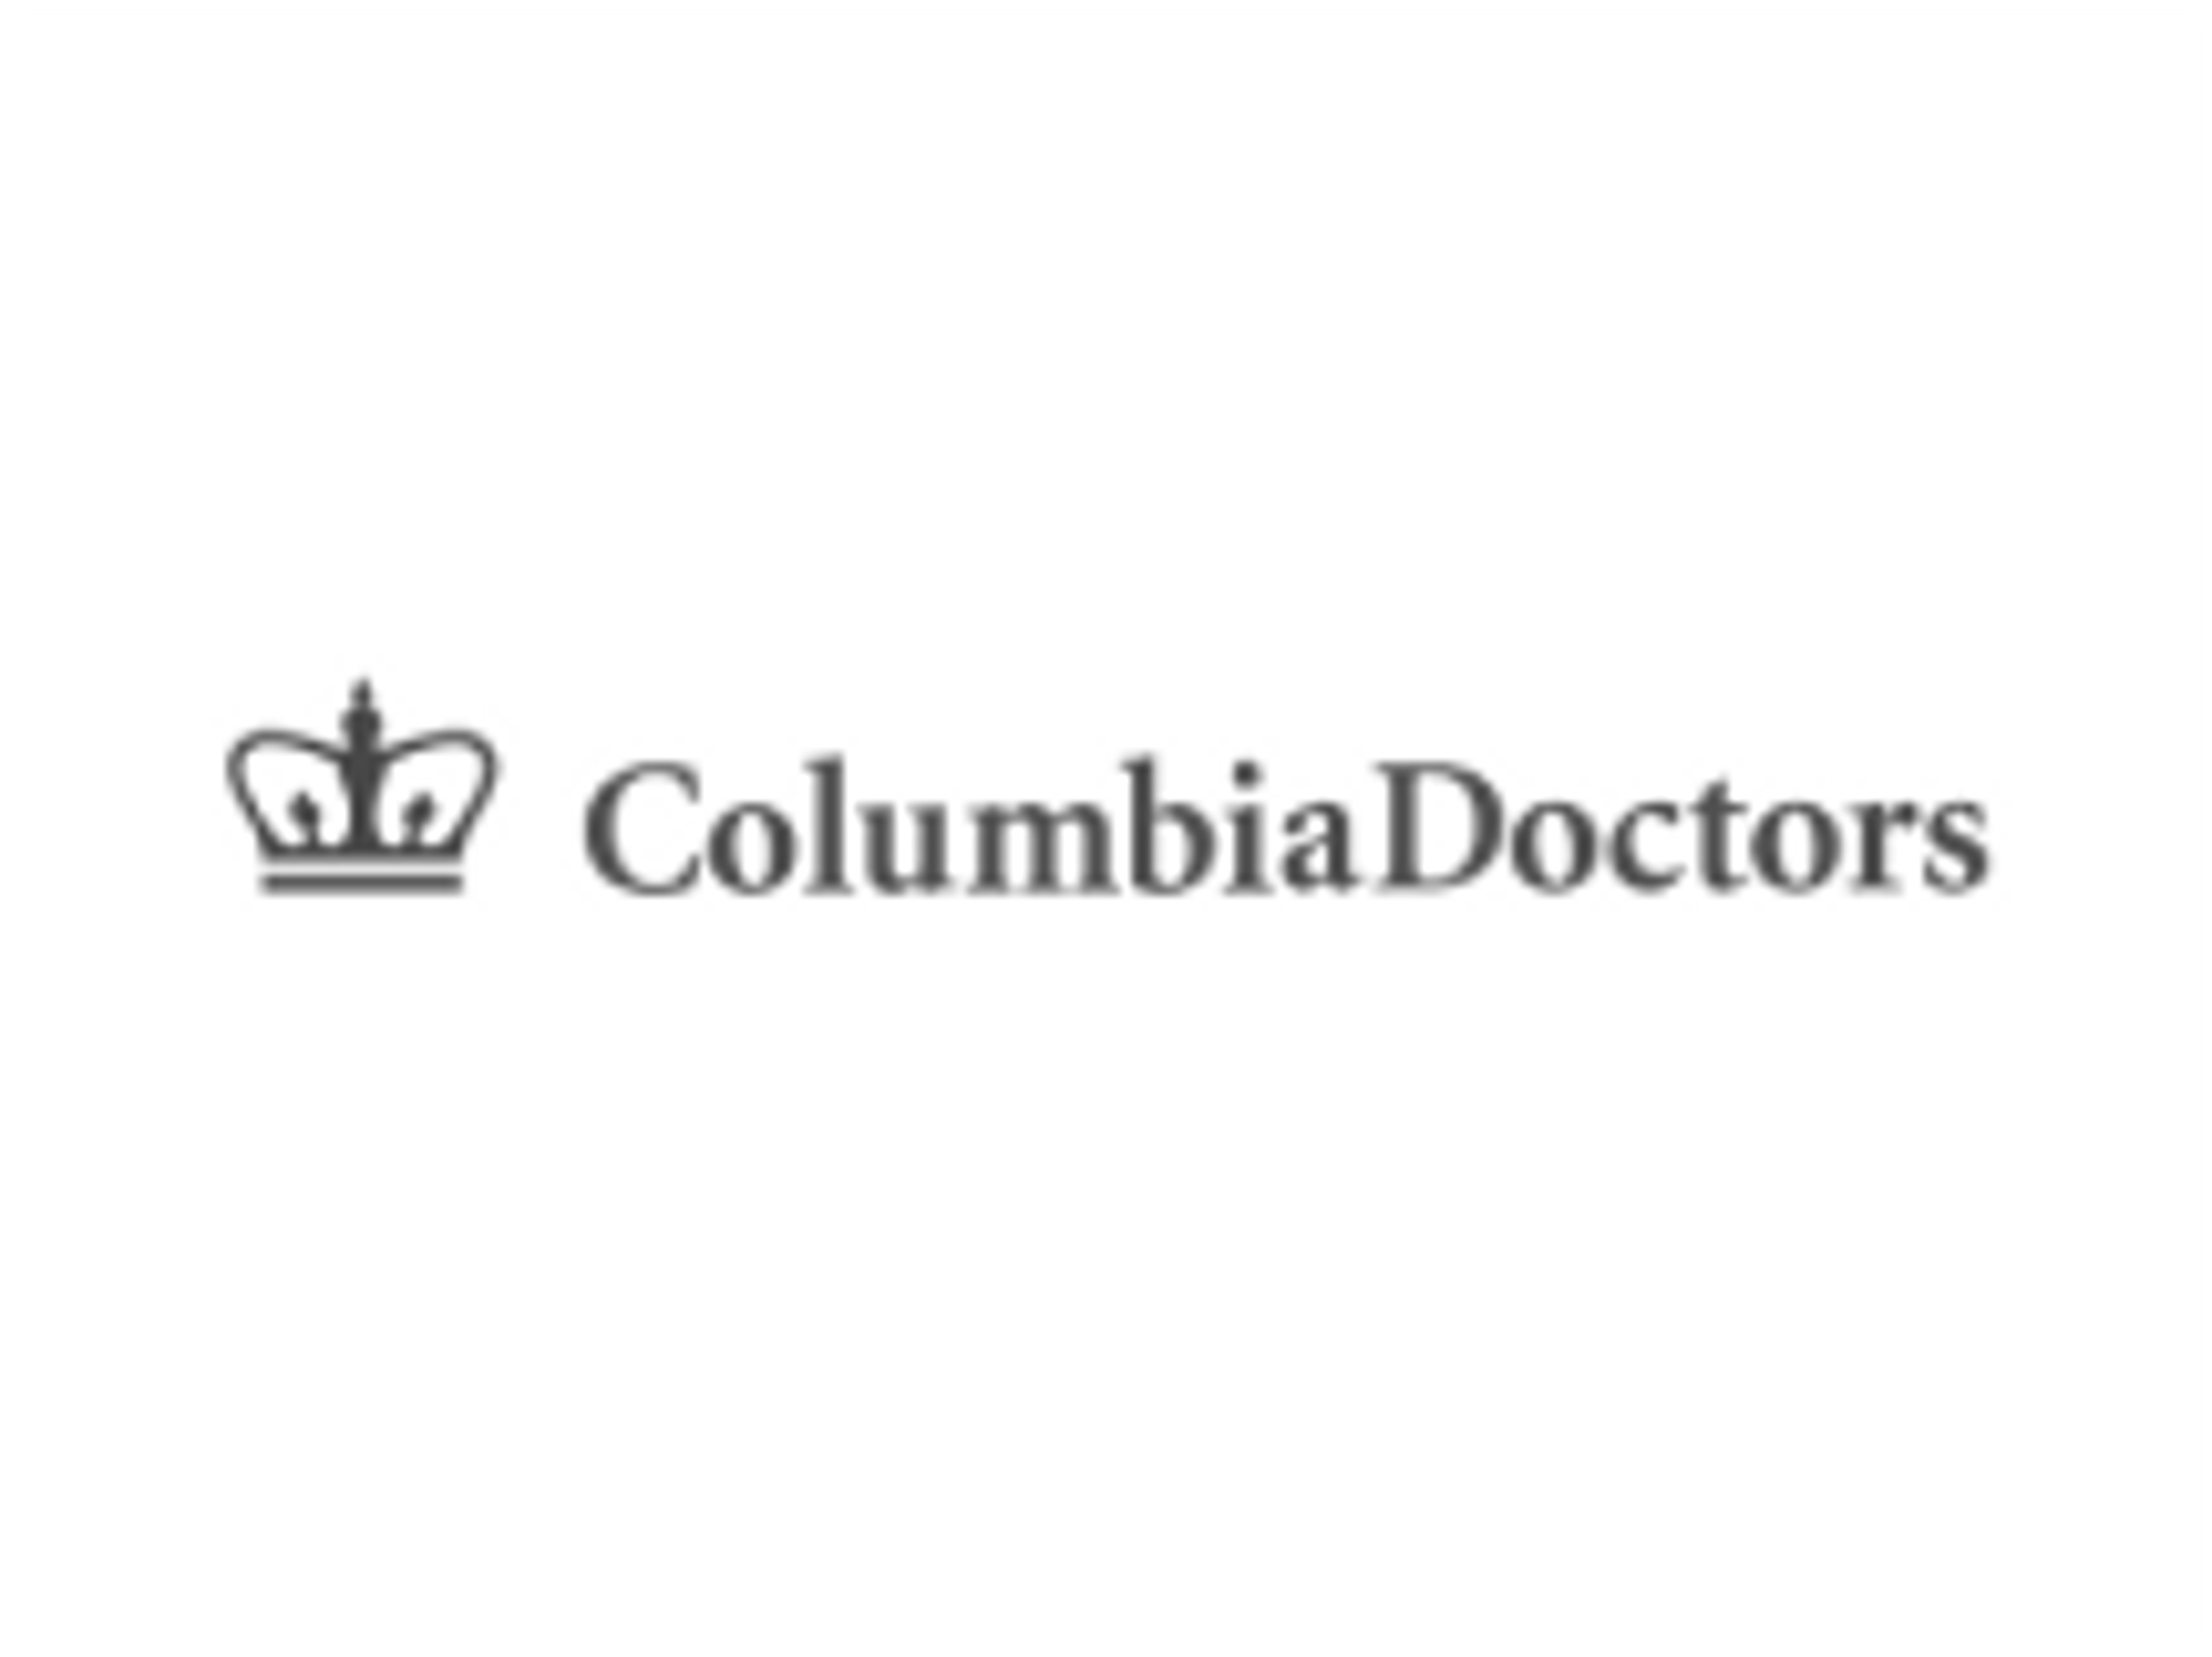 ColumbiaDoctors logo